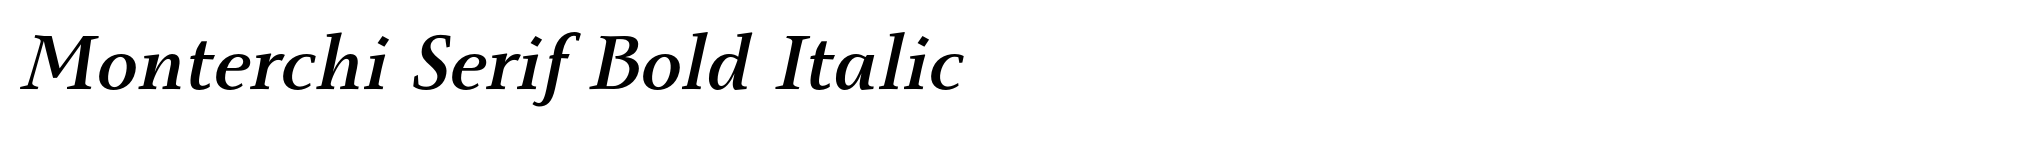 Monterchi Serif Bold Italic image